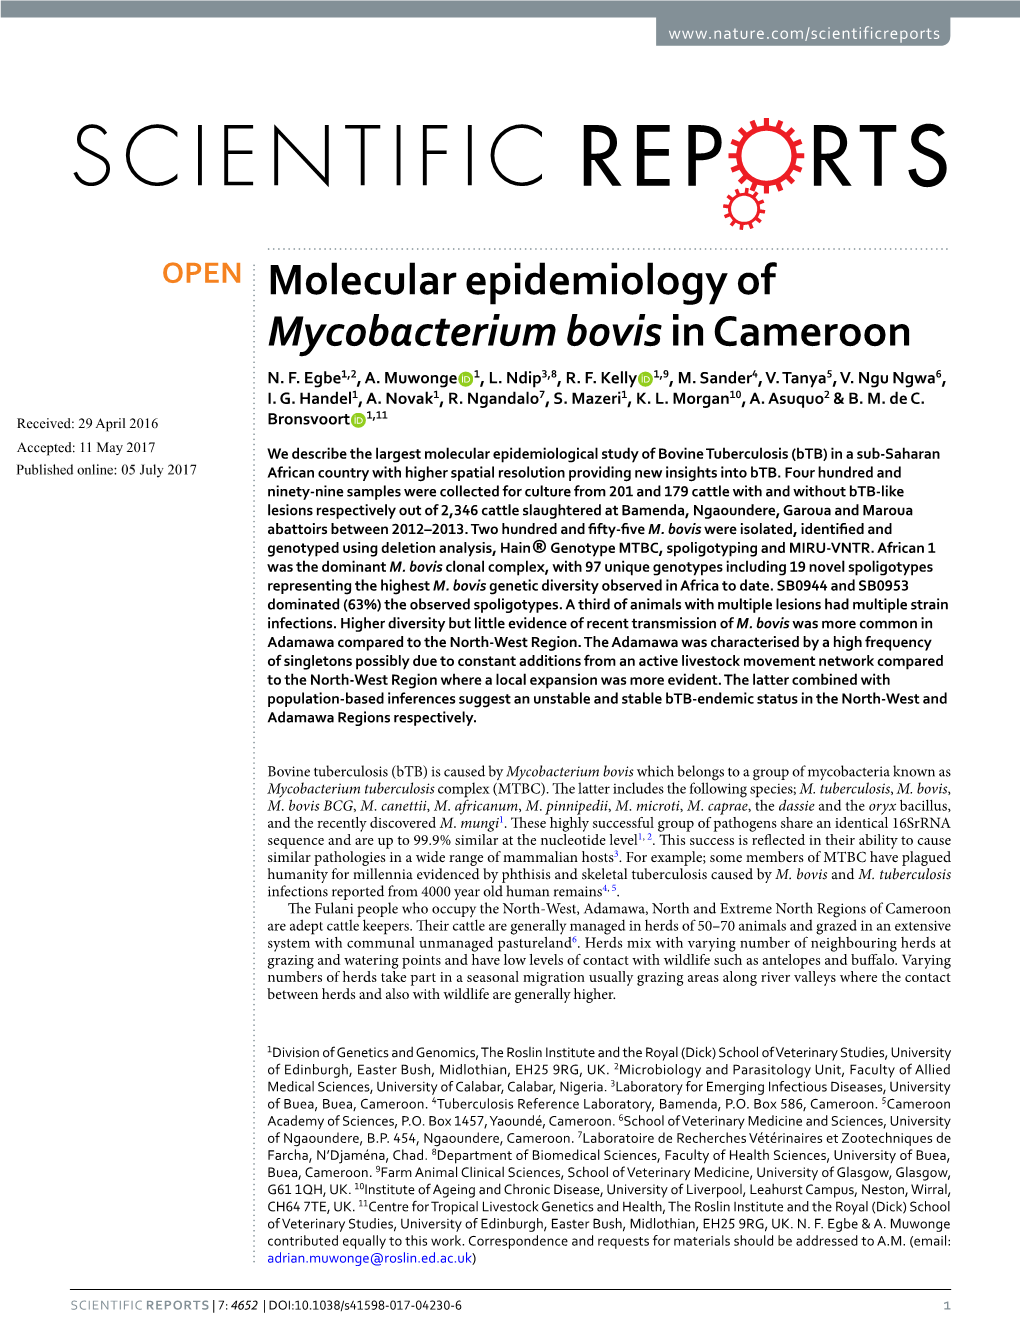 Molecular Epidemiology of Mycobacterium Bovis in Cameroon N